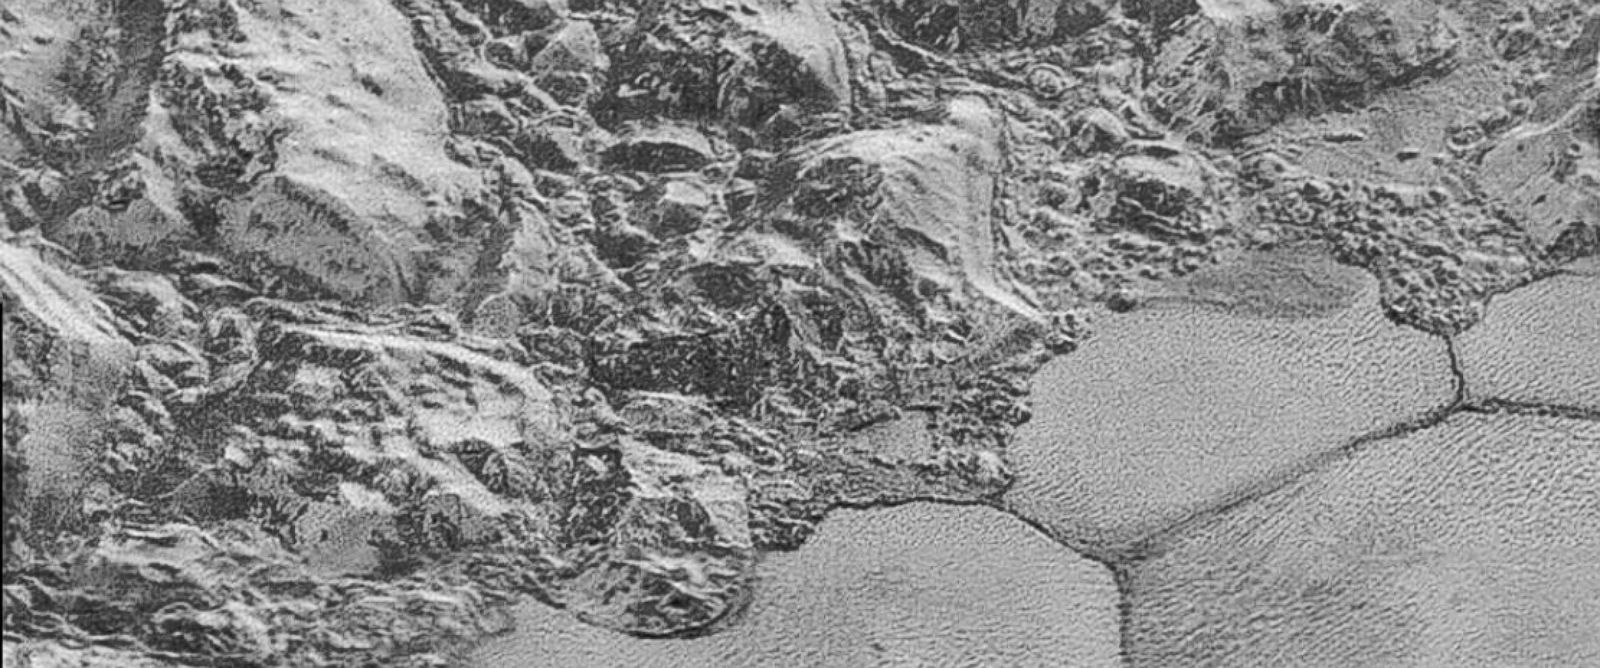 PHOTO: New Horizons sent back a close-up of Plutos surface.